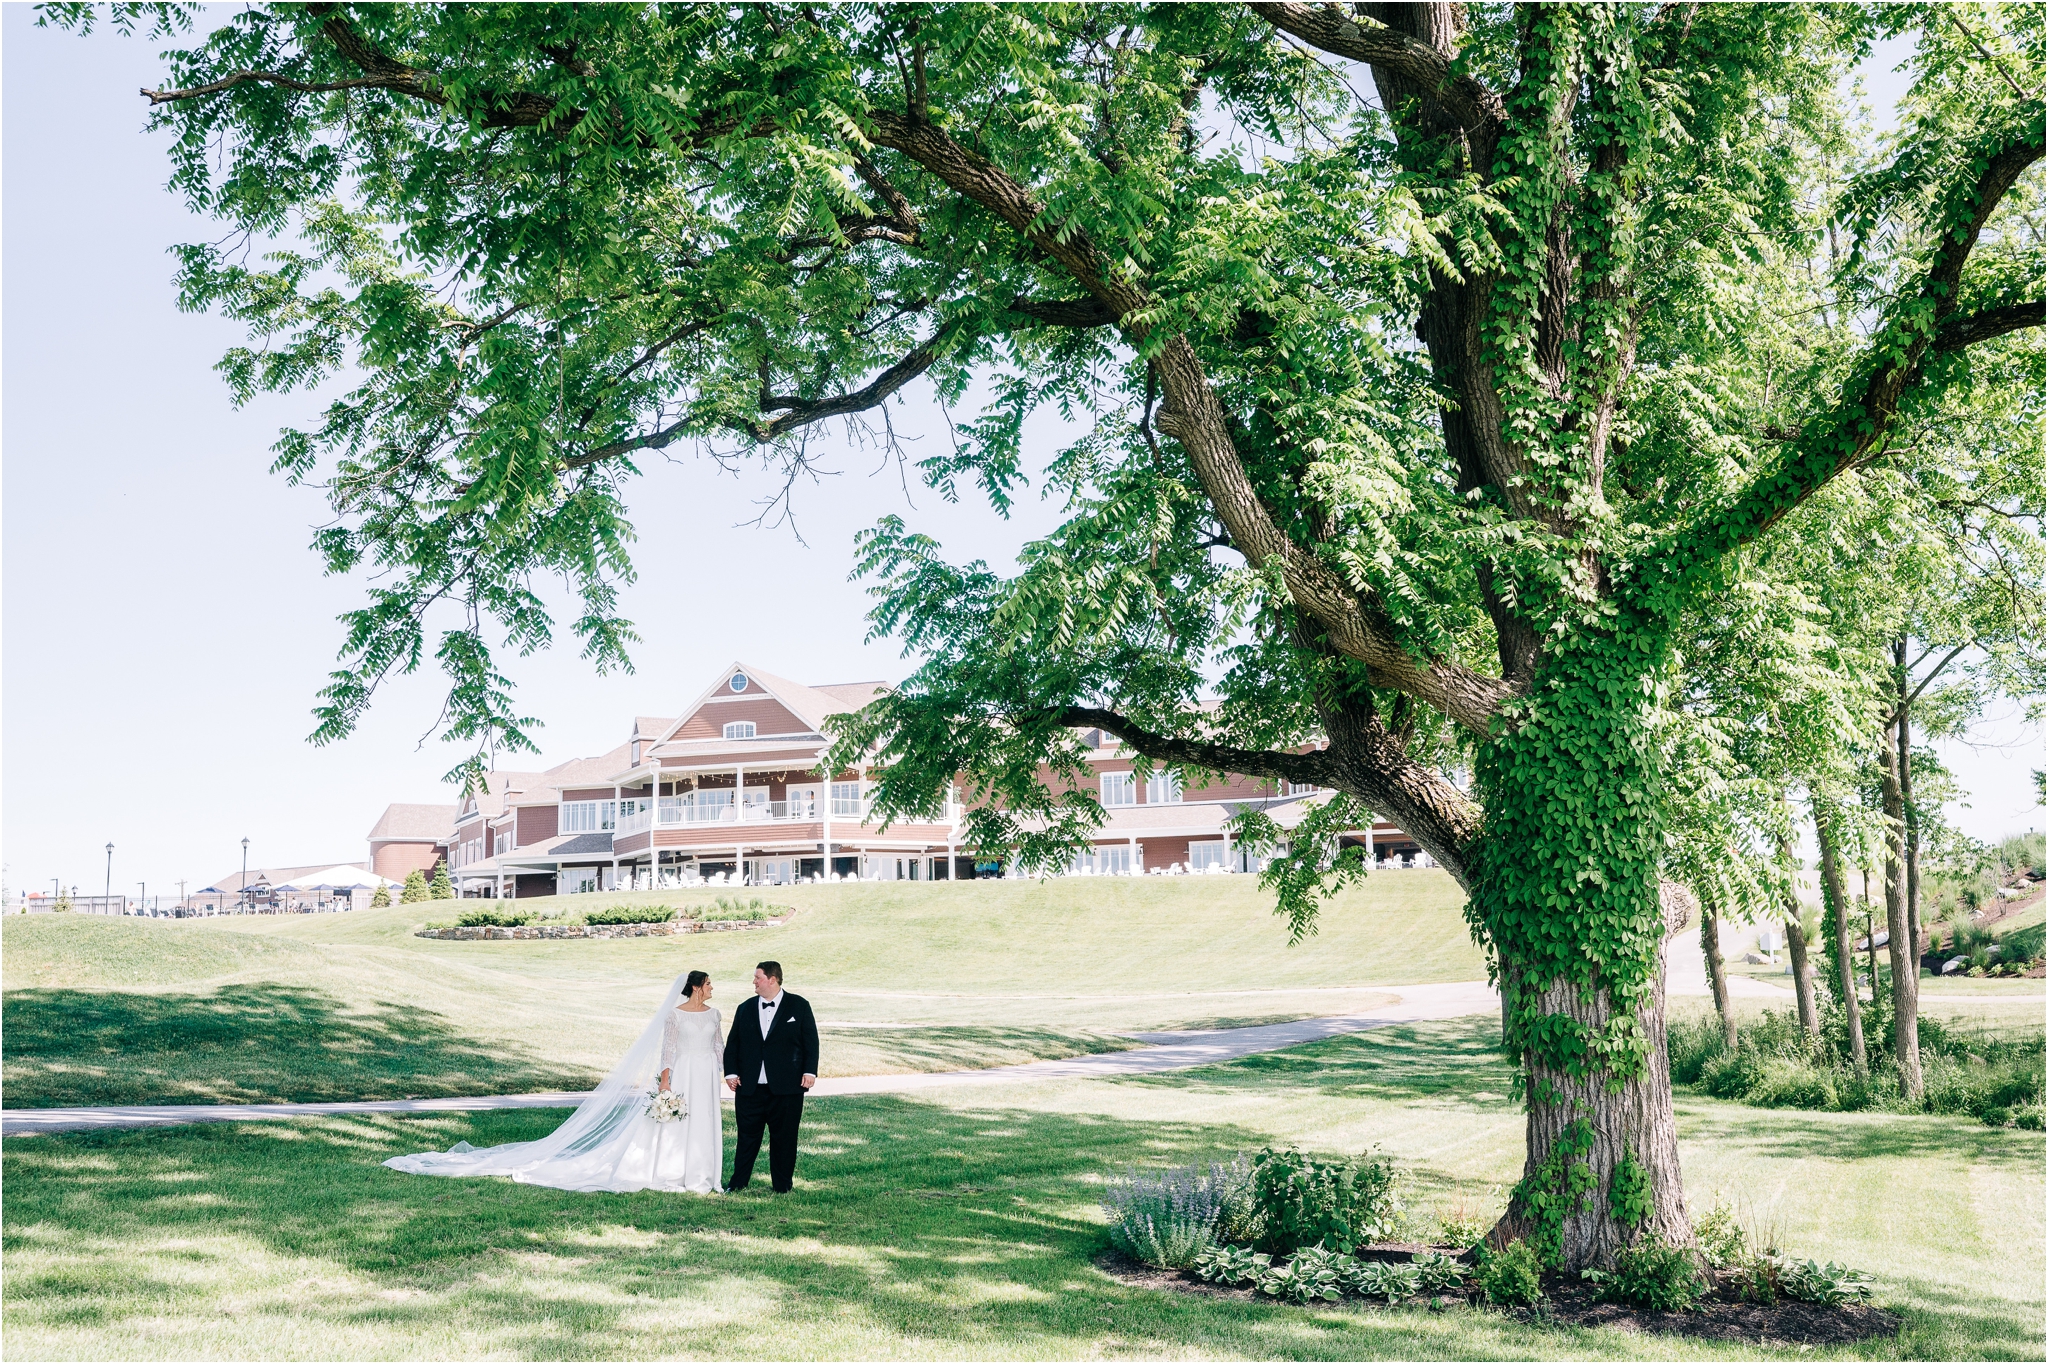 oak tree wedding day photos on chatham hills property